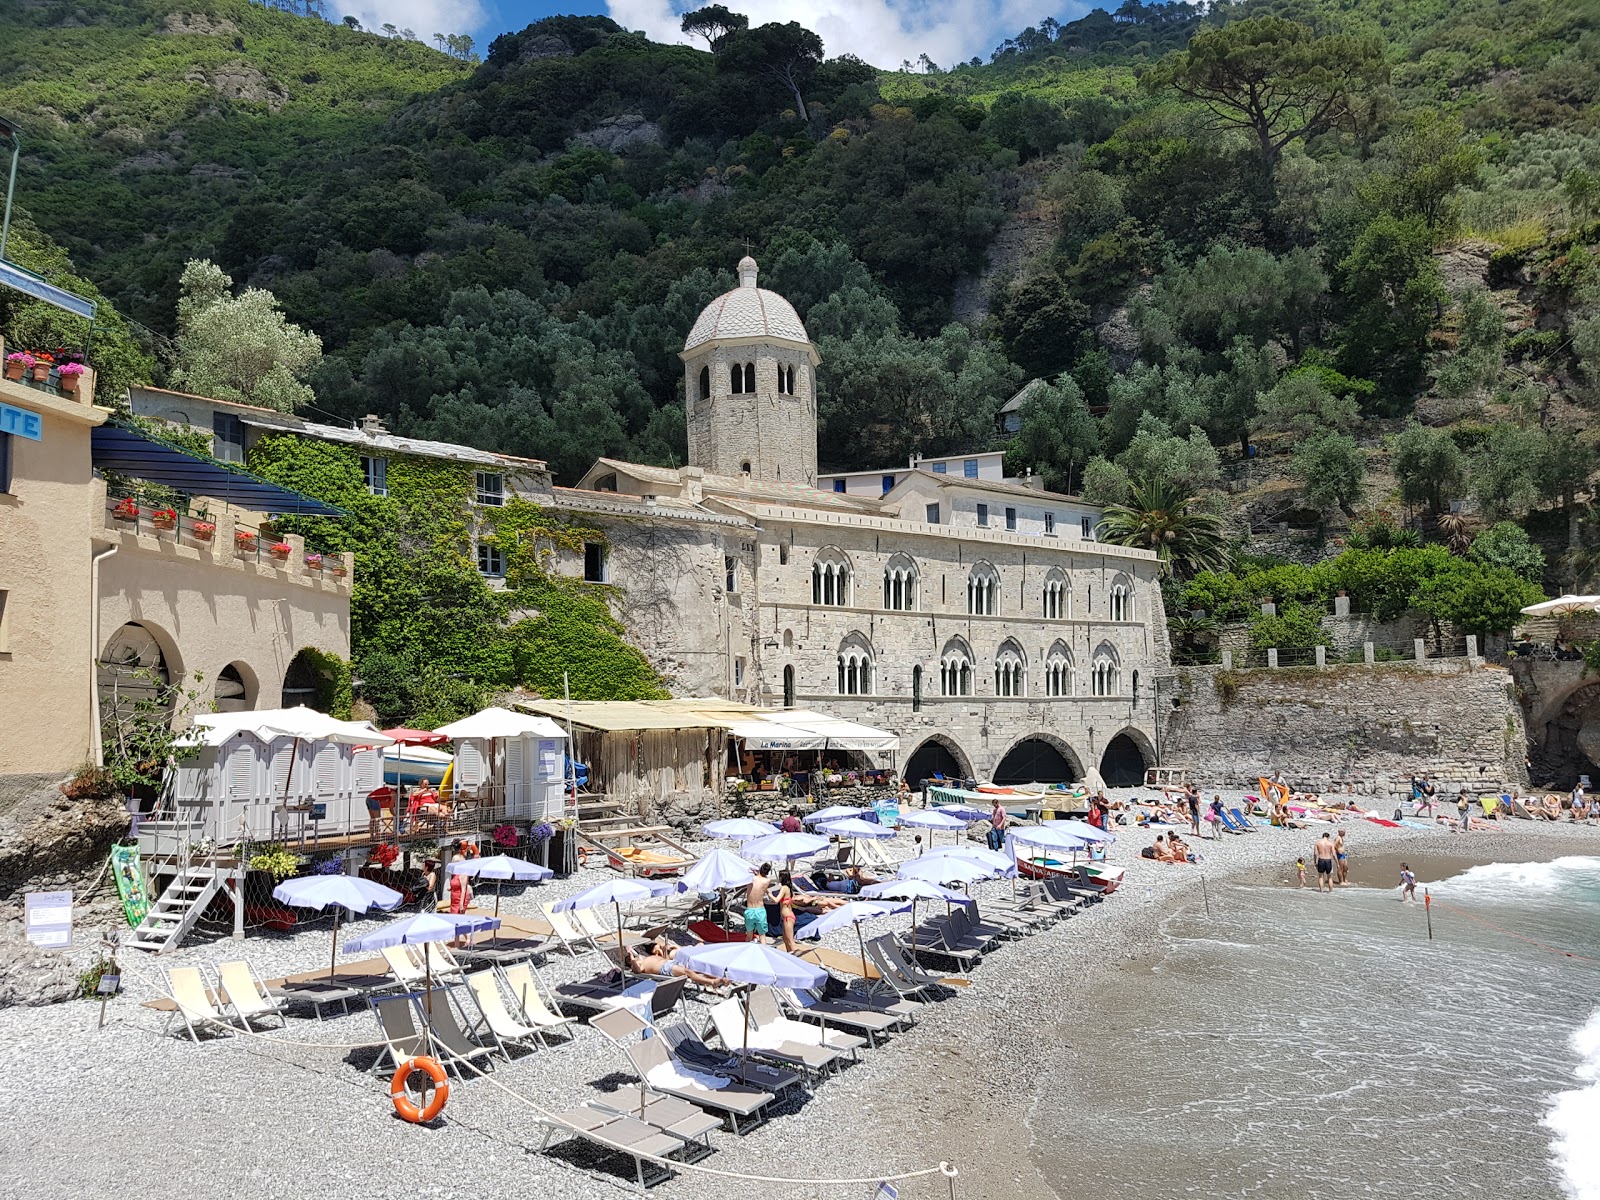 Foto av Spiaggia San Fruttuoso med hög nivå av renlighet